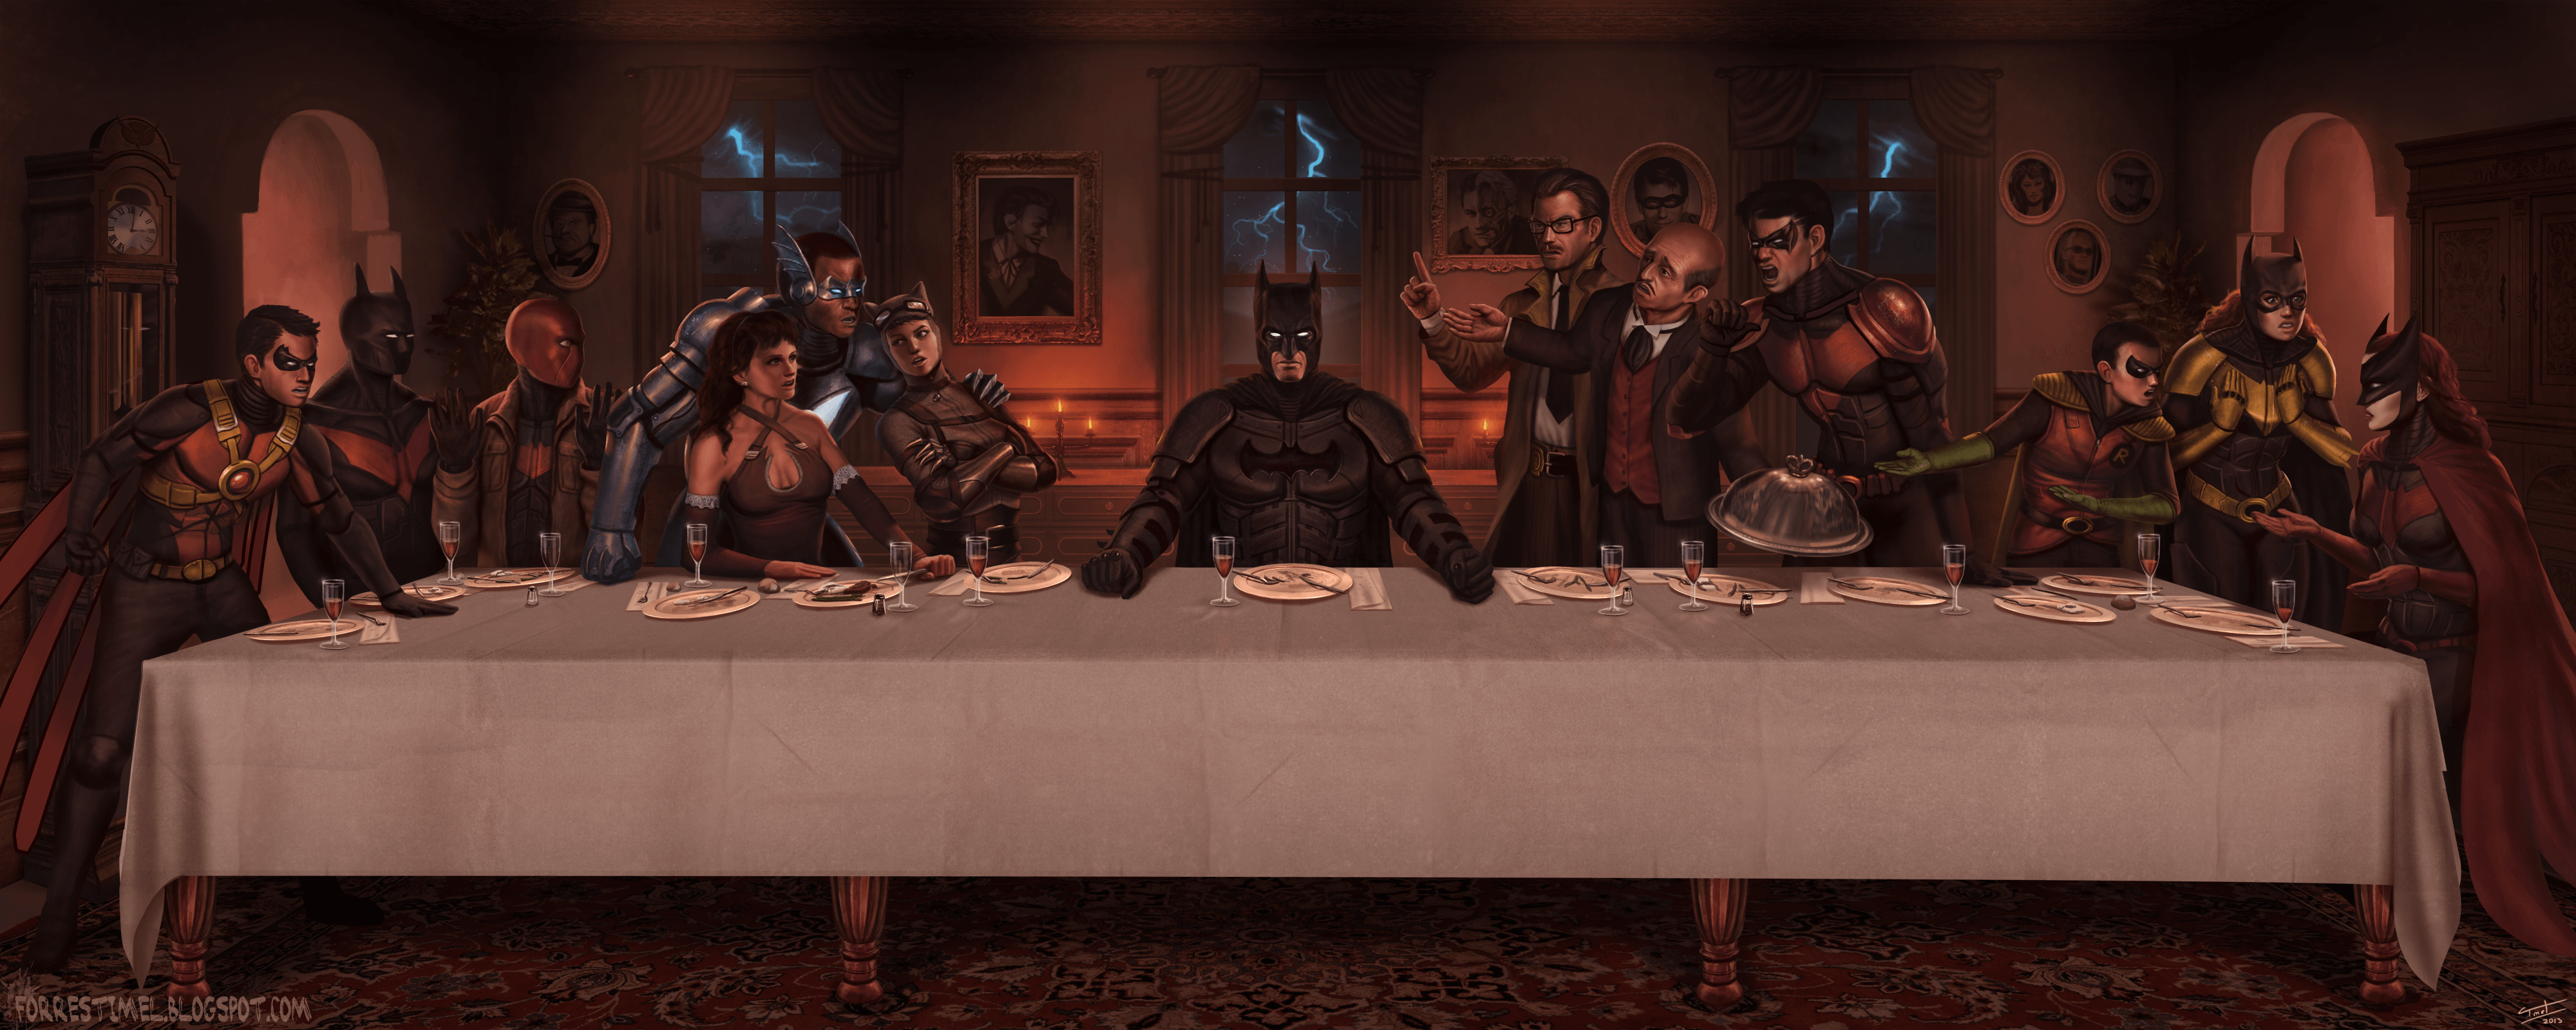 The Last Supper at Wayne Manor